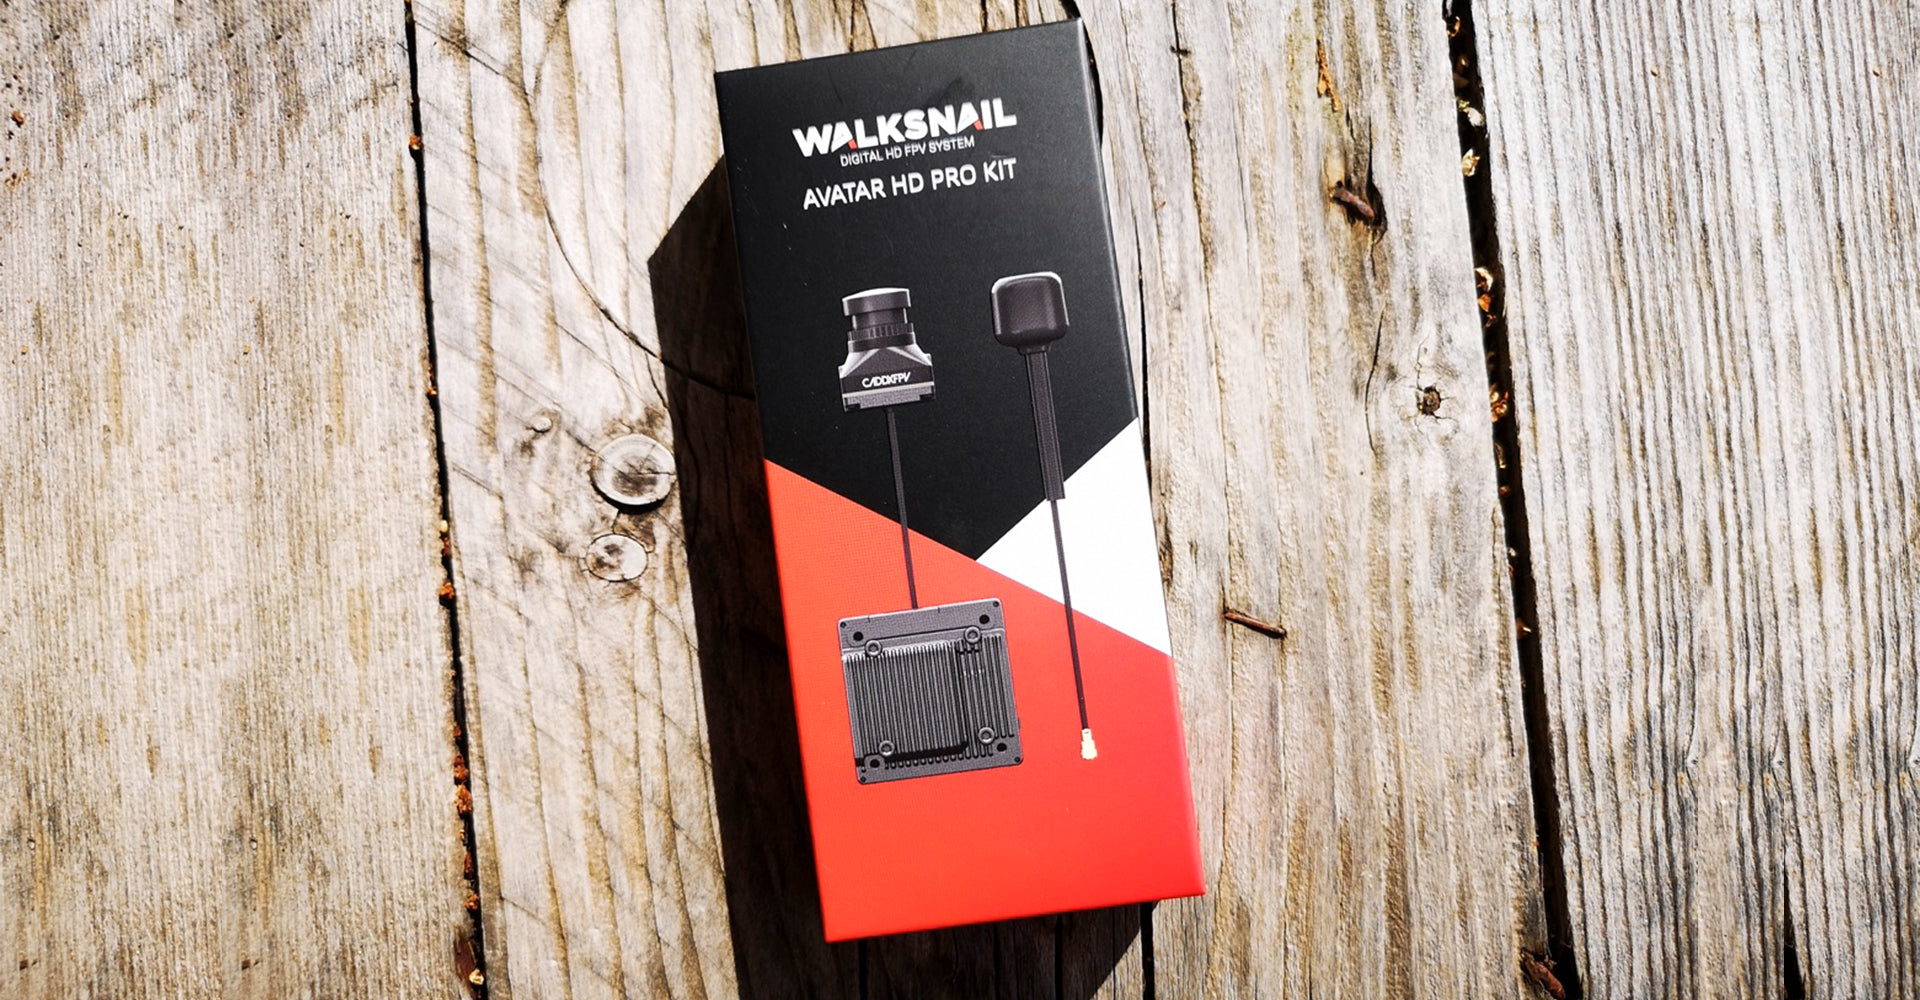 Walksnail Avatar HD Pro Kit,Testing a digital video feedback and image stabilization system